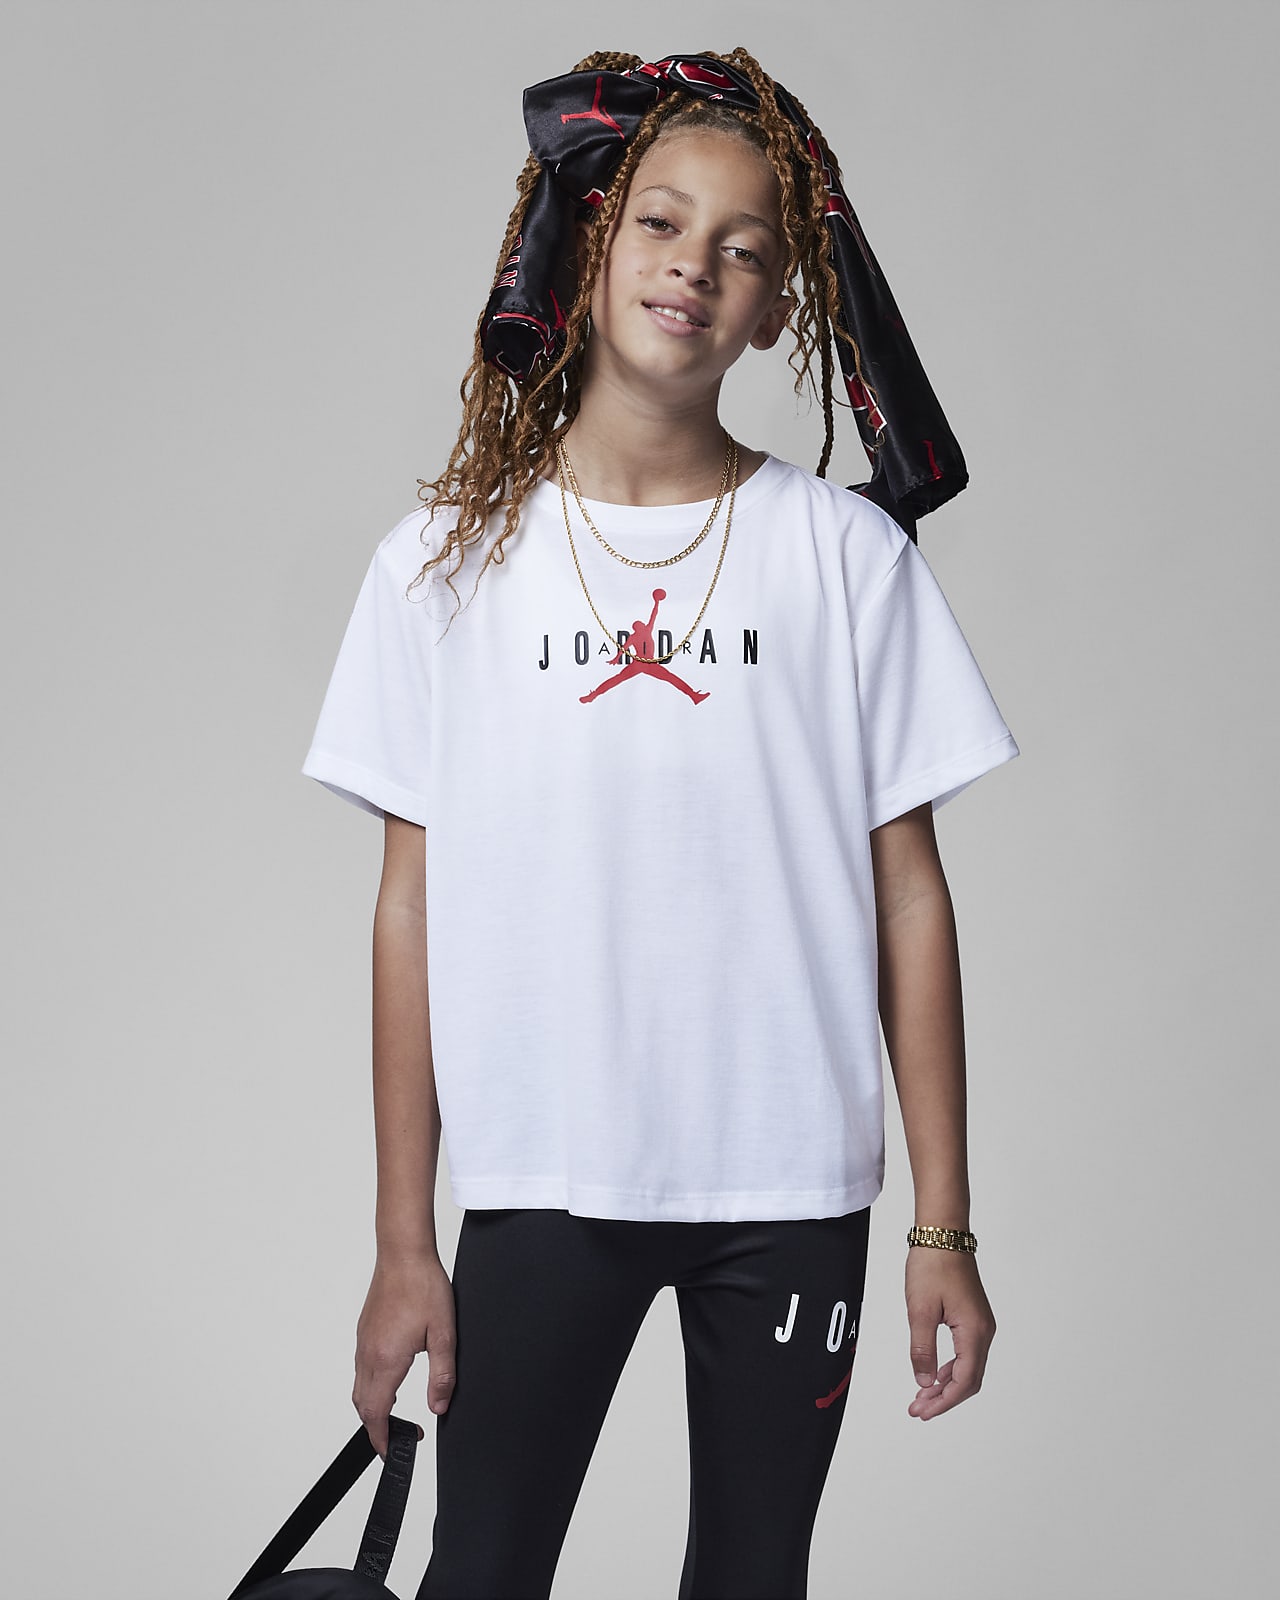 cantidad Comparable T Jordan Camiseta - Niño/a. Nike ES